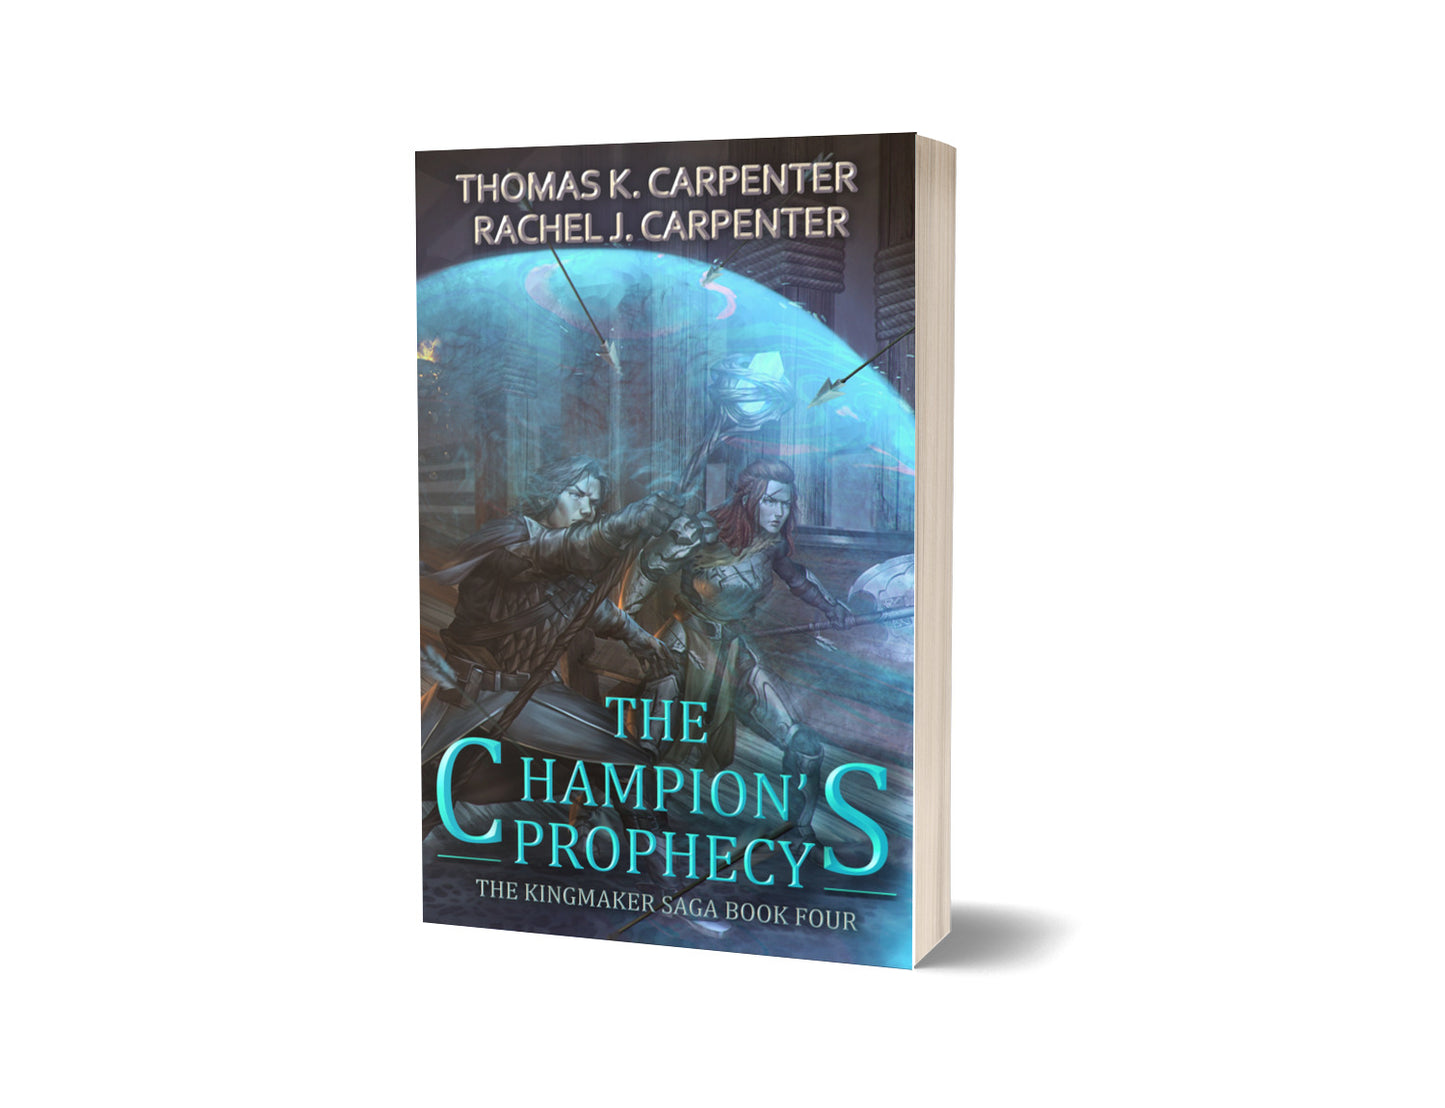 The Champion's Prophecy: A LitRPG Adventure (Kingmaker Saga Book 4)